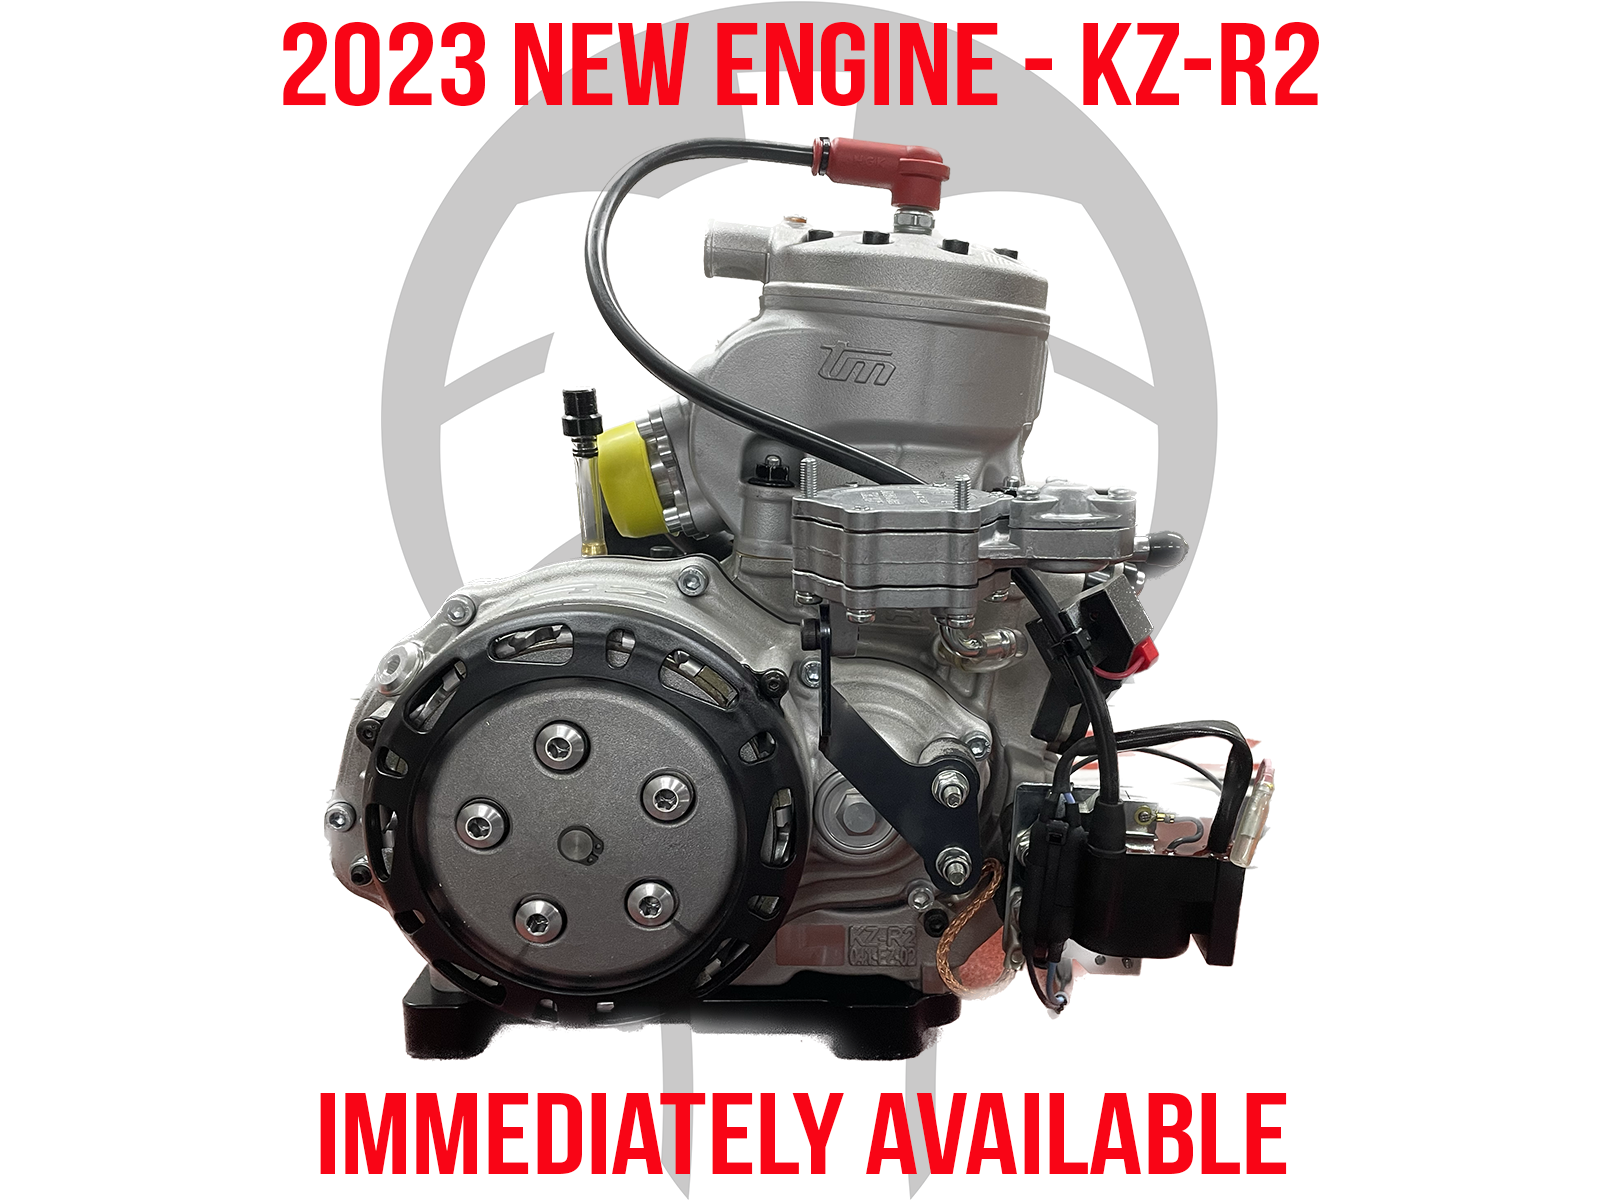 2023 ENGINE KZ-R2